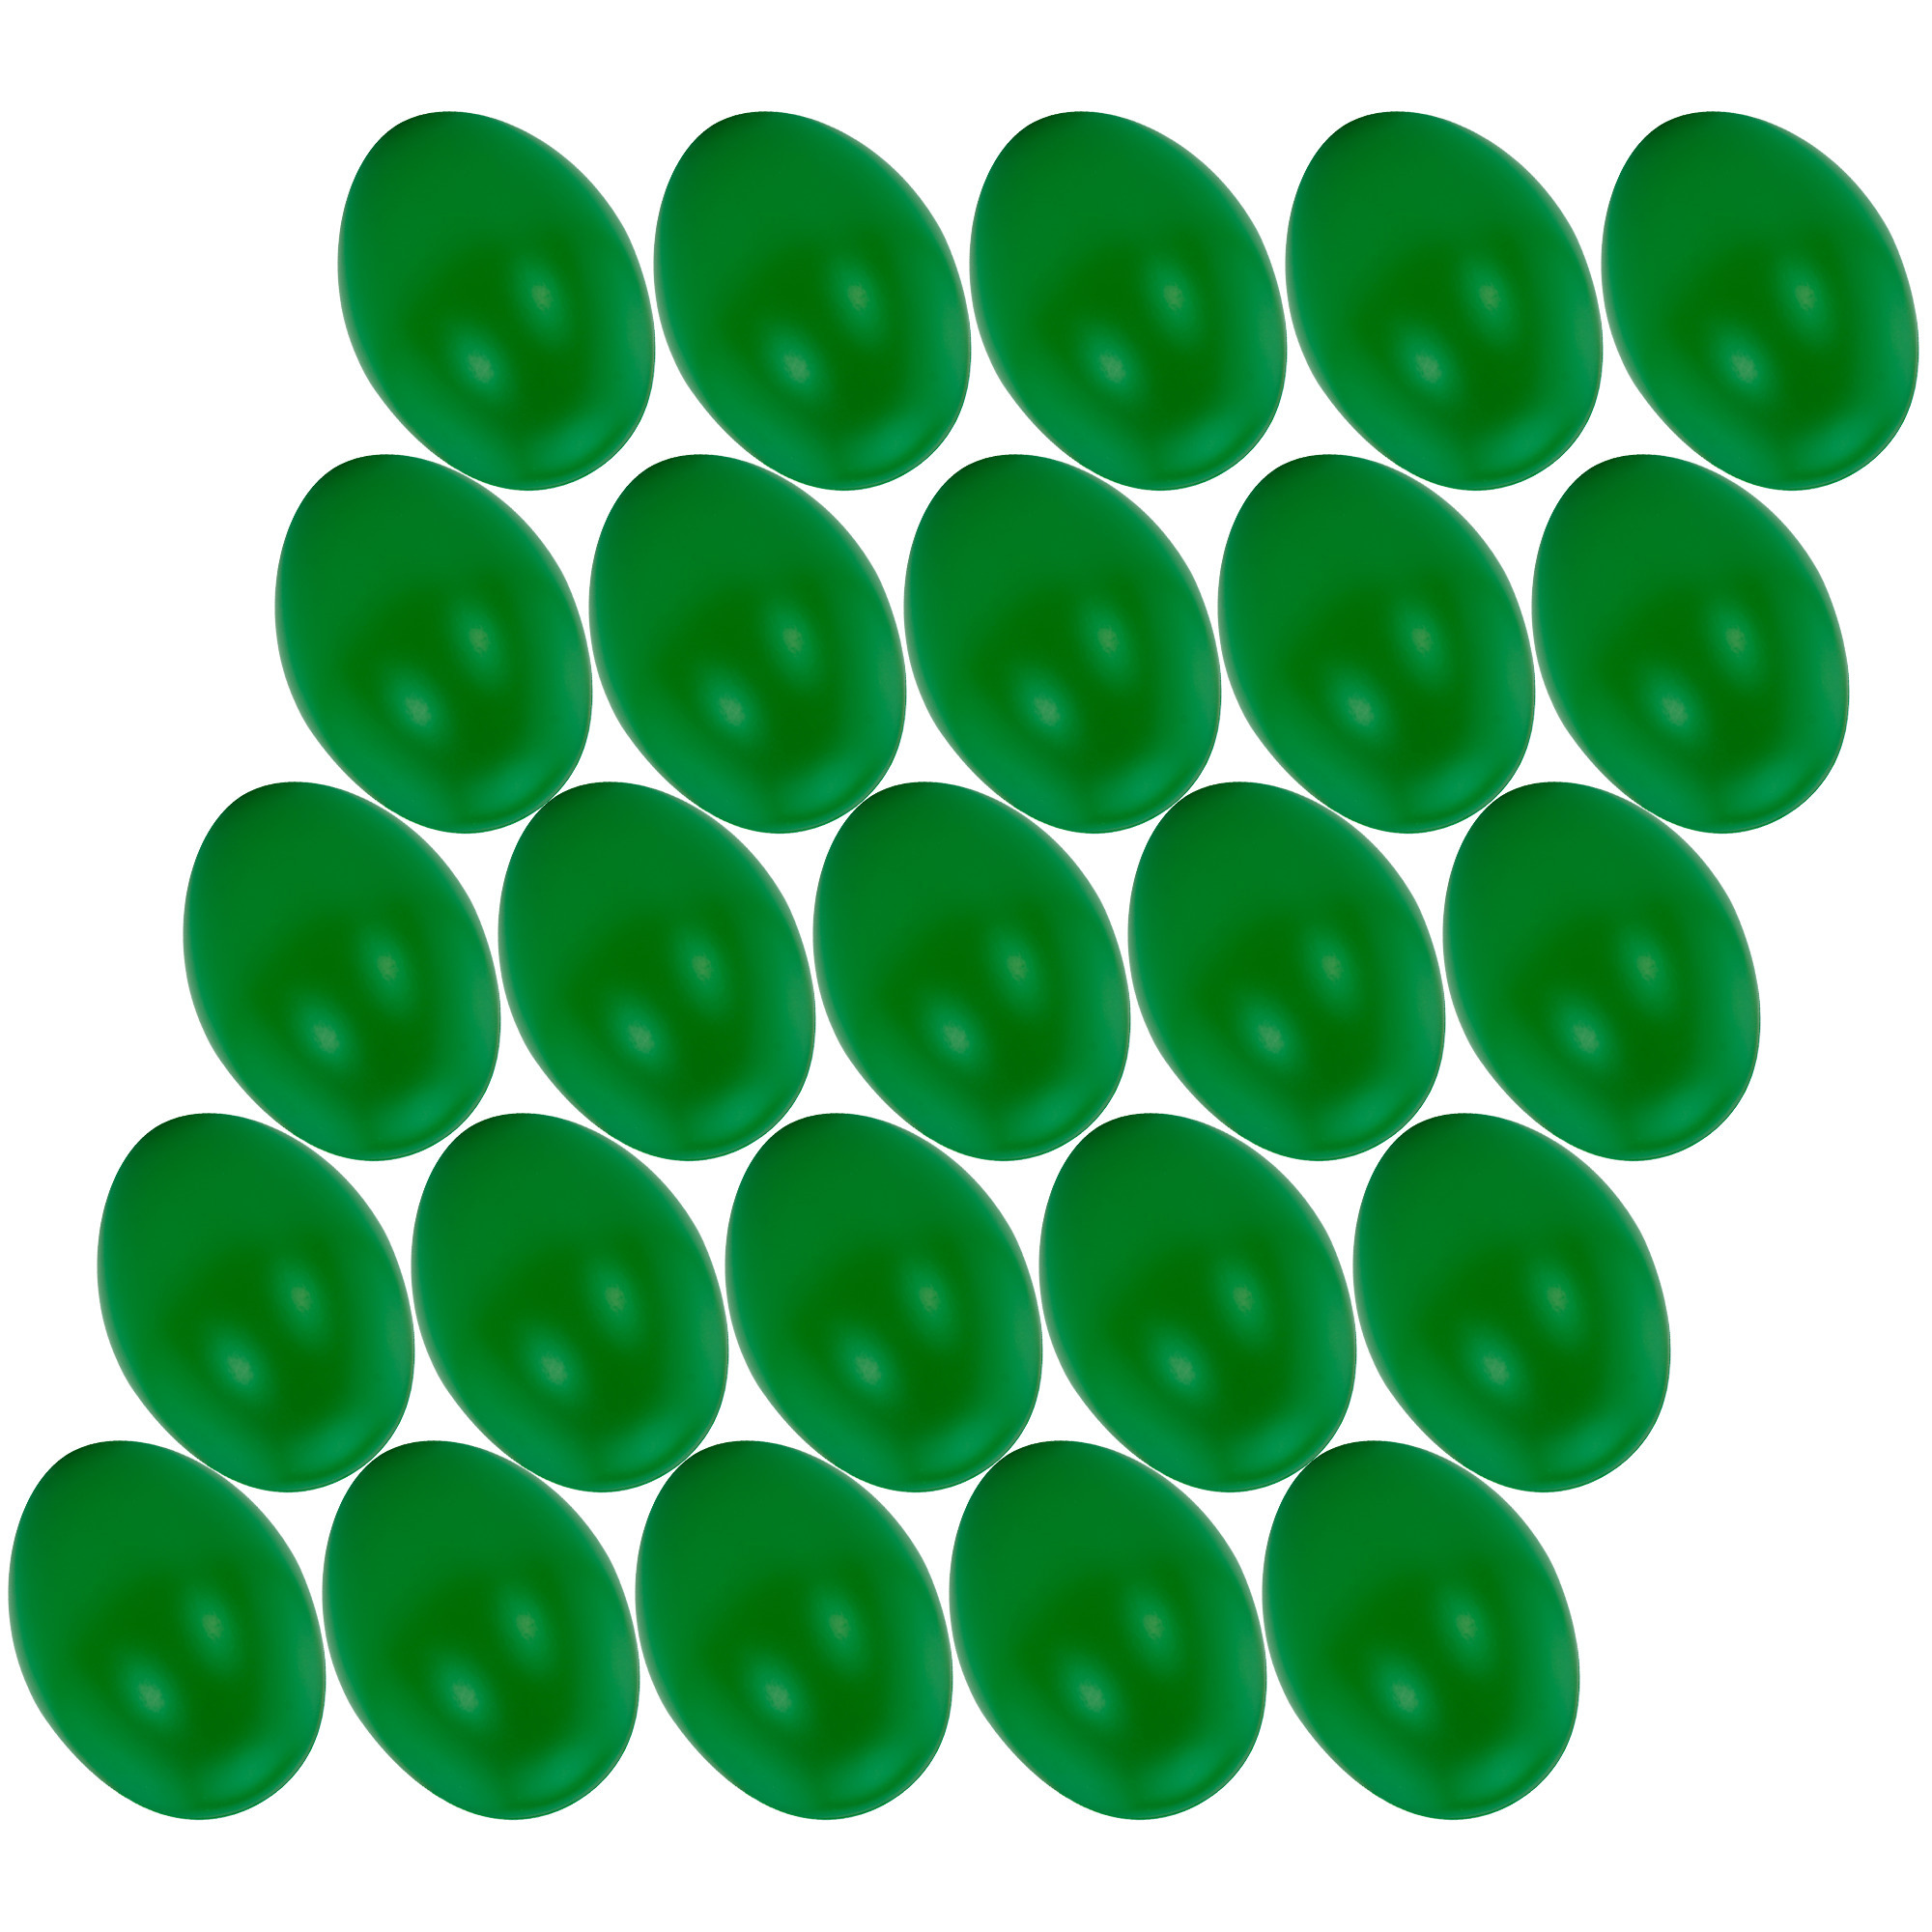 25x stuks groen hobby knutselen eieren van plastic 4.5 cm